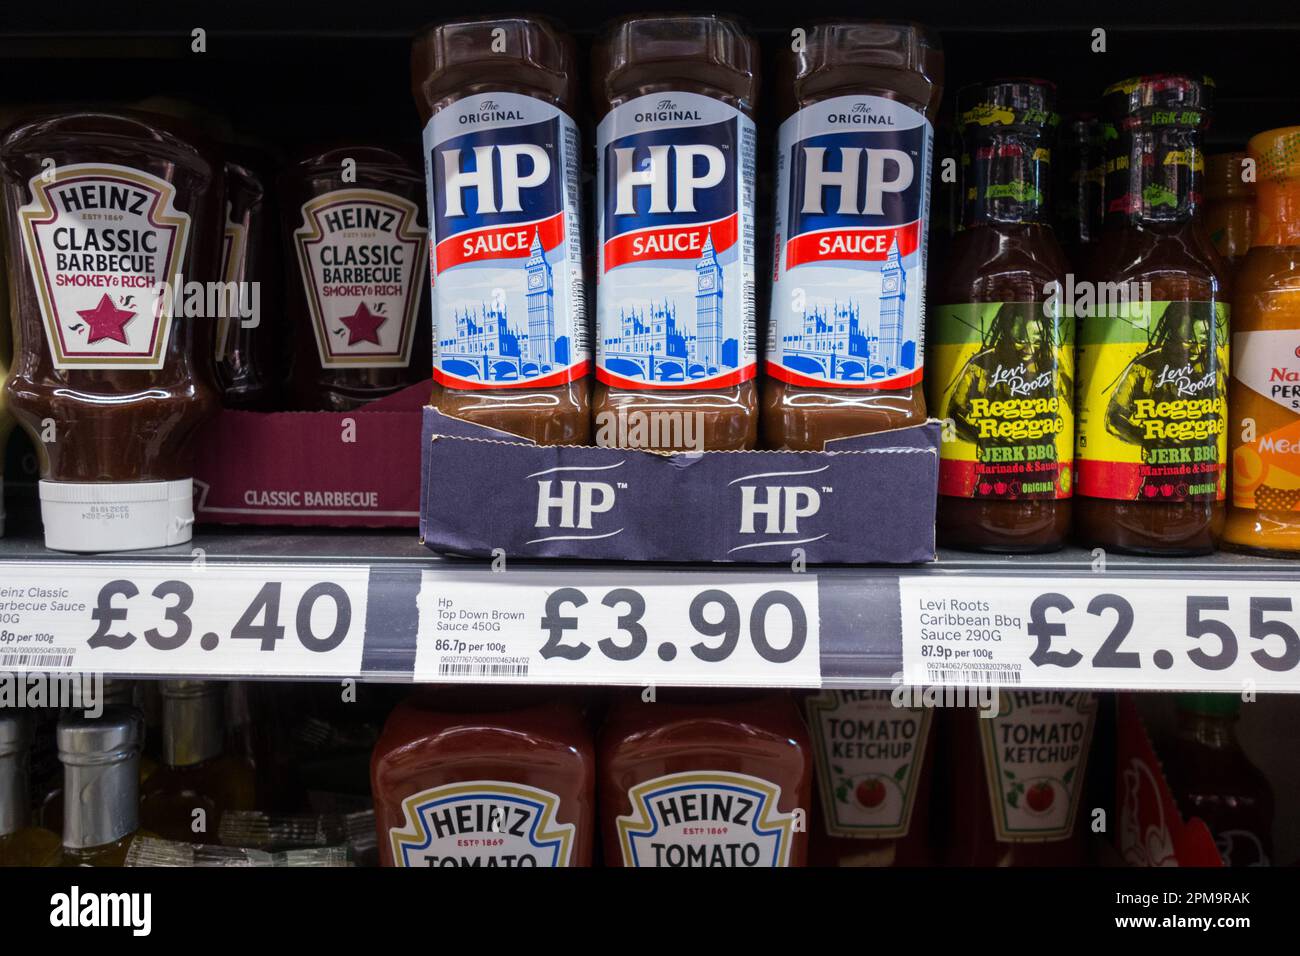 £3.90 HP Sauce bottles on a supermarket shelf Stock Photo